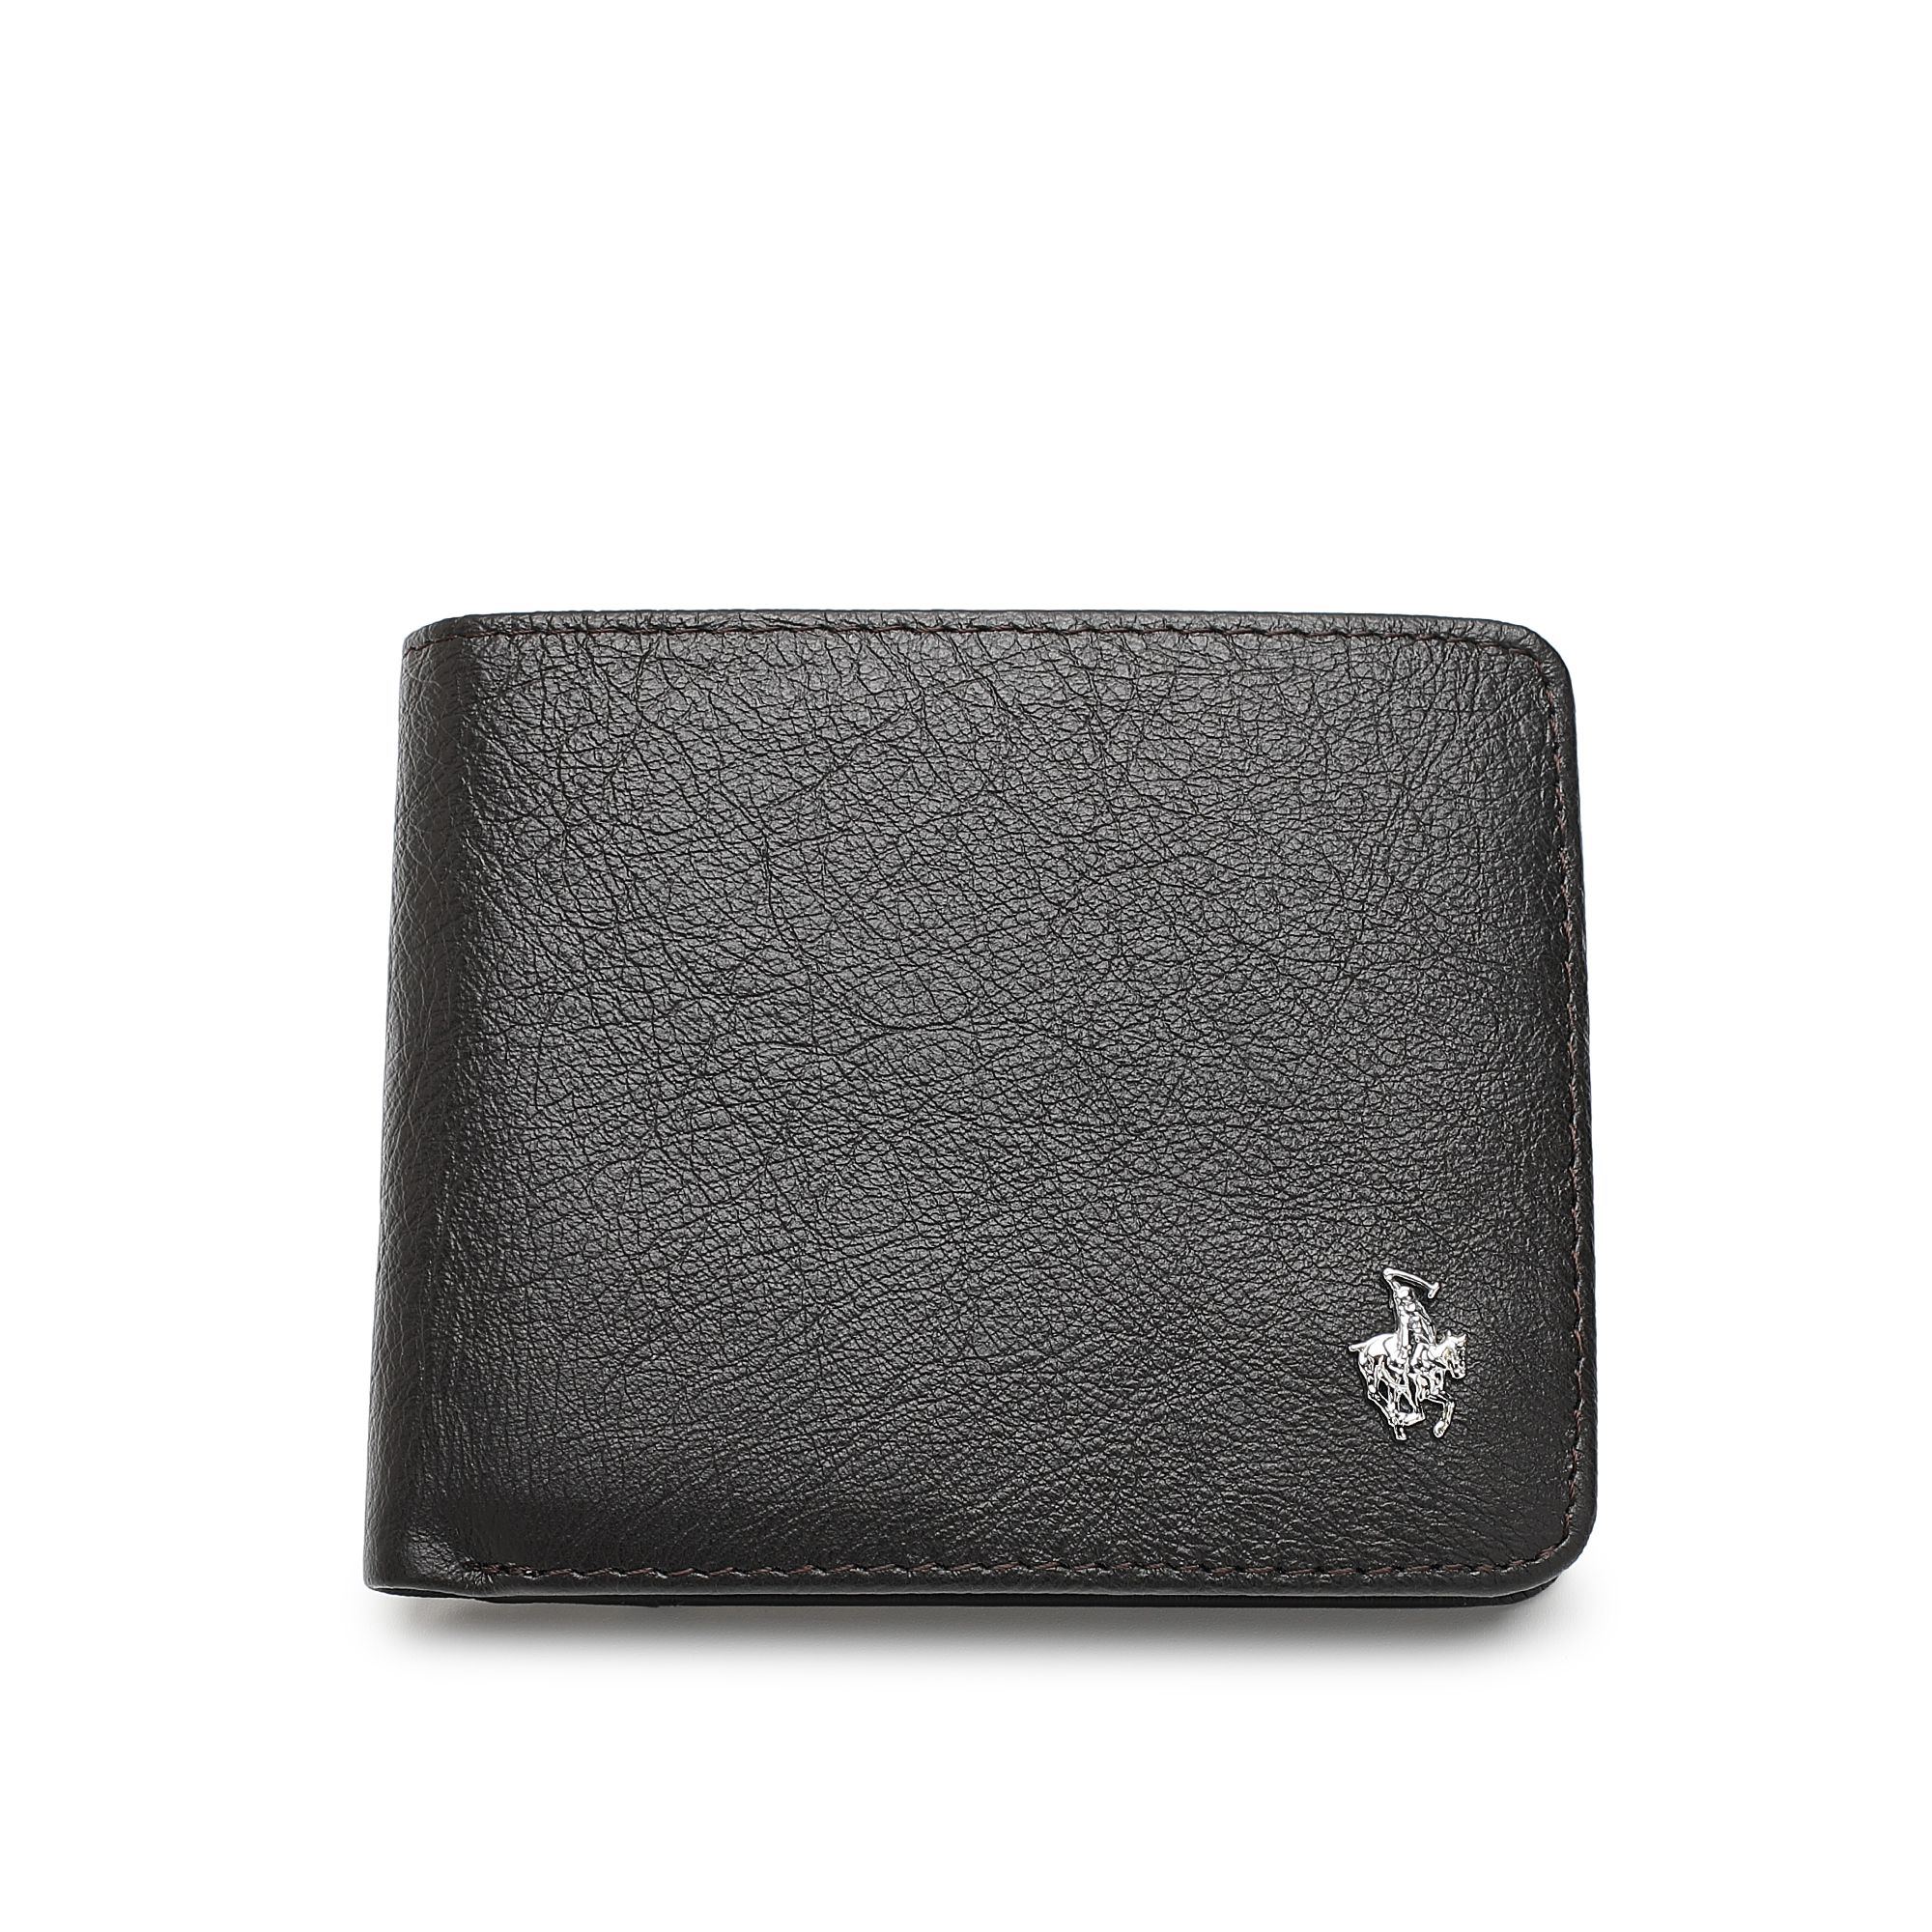 SWISS POLO Genuine Leather Zipper RFID Short Wallet SW 171-5 DARK COFFEE